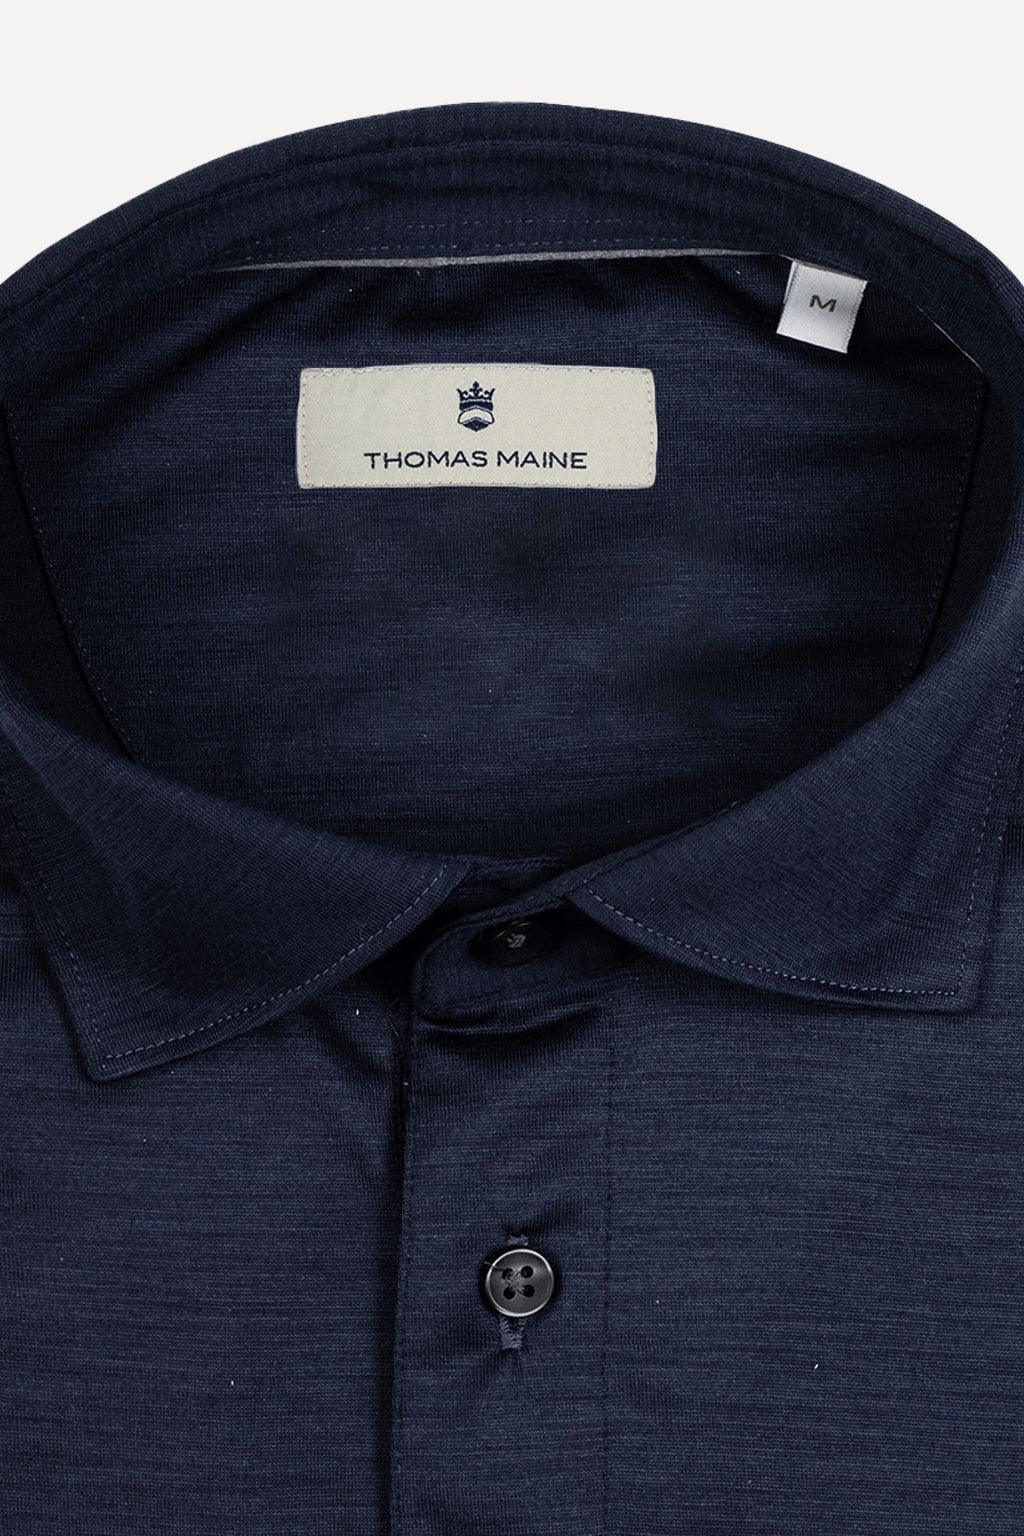 Thomas Maine polo - Big Boss | the menswear concept